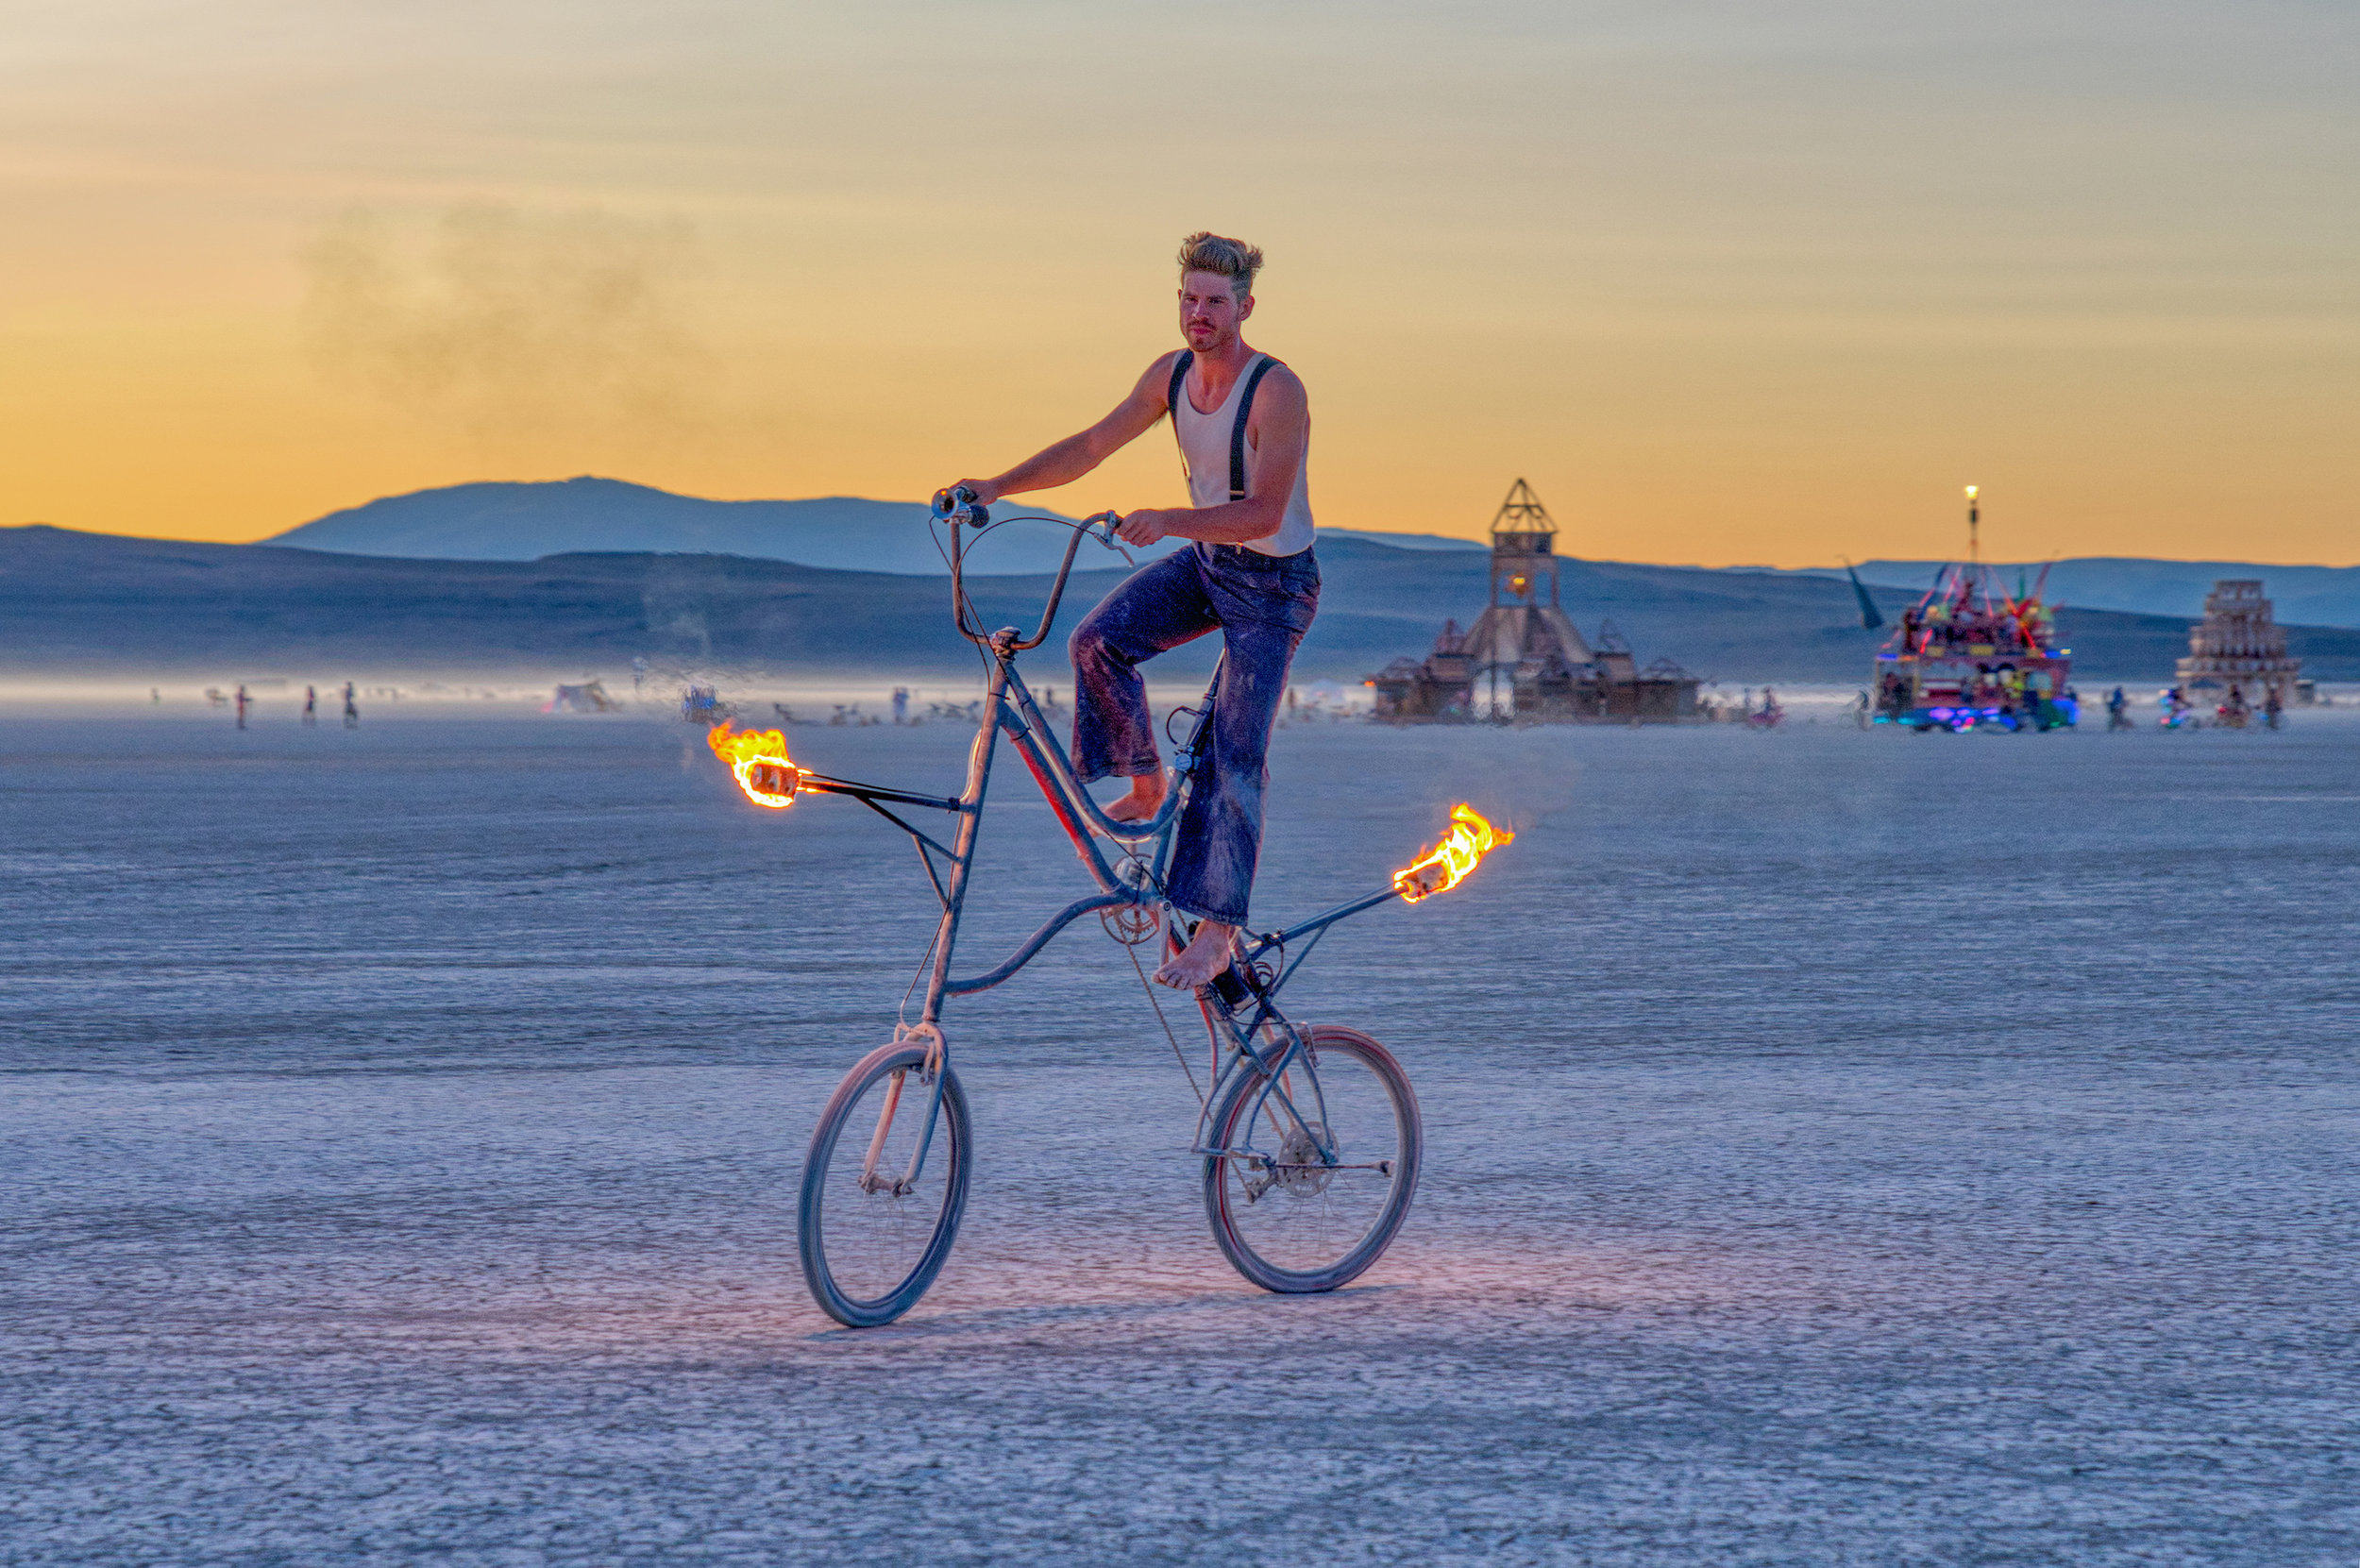 Burning Man 2019 - Fire Rider in Deep Playa